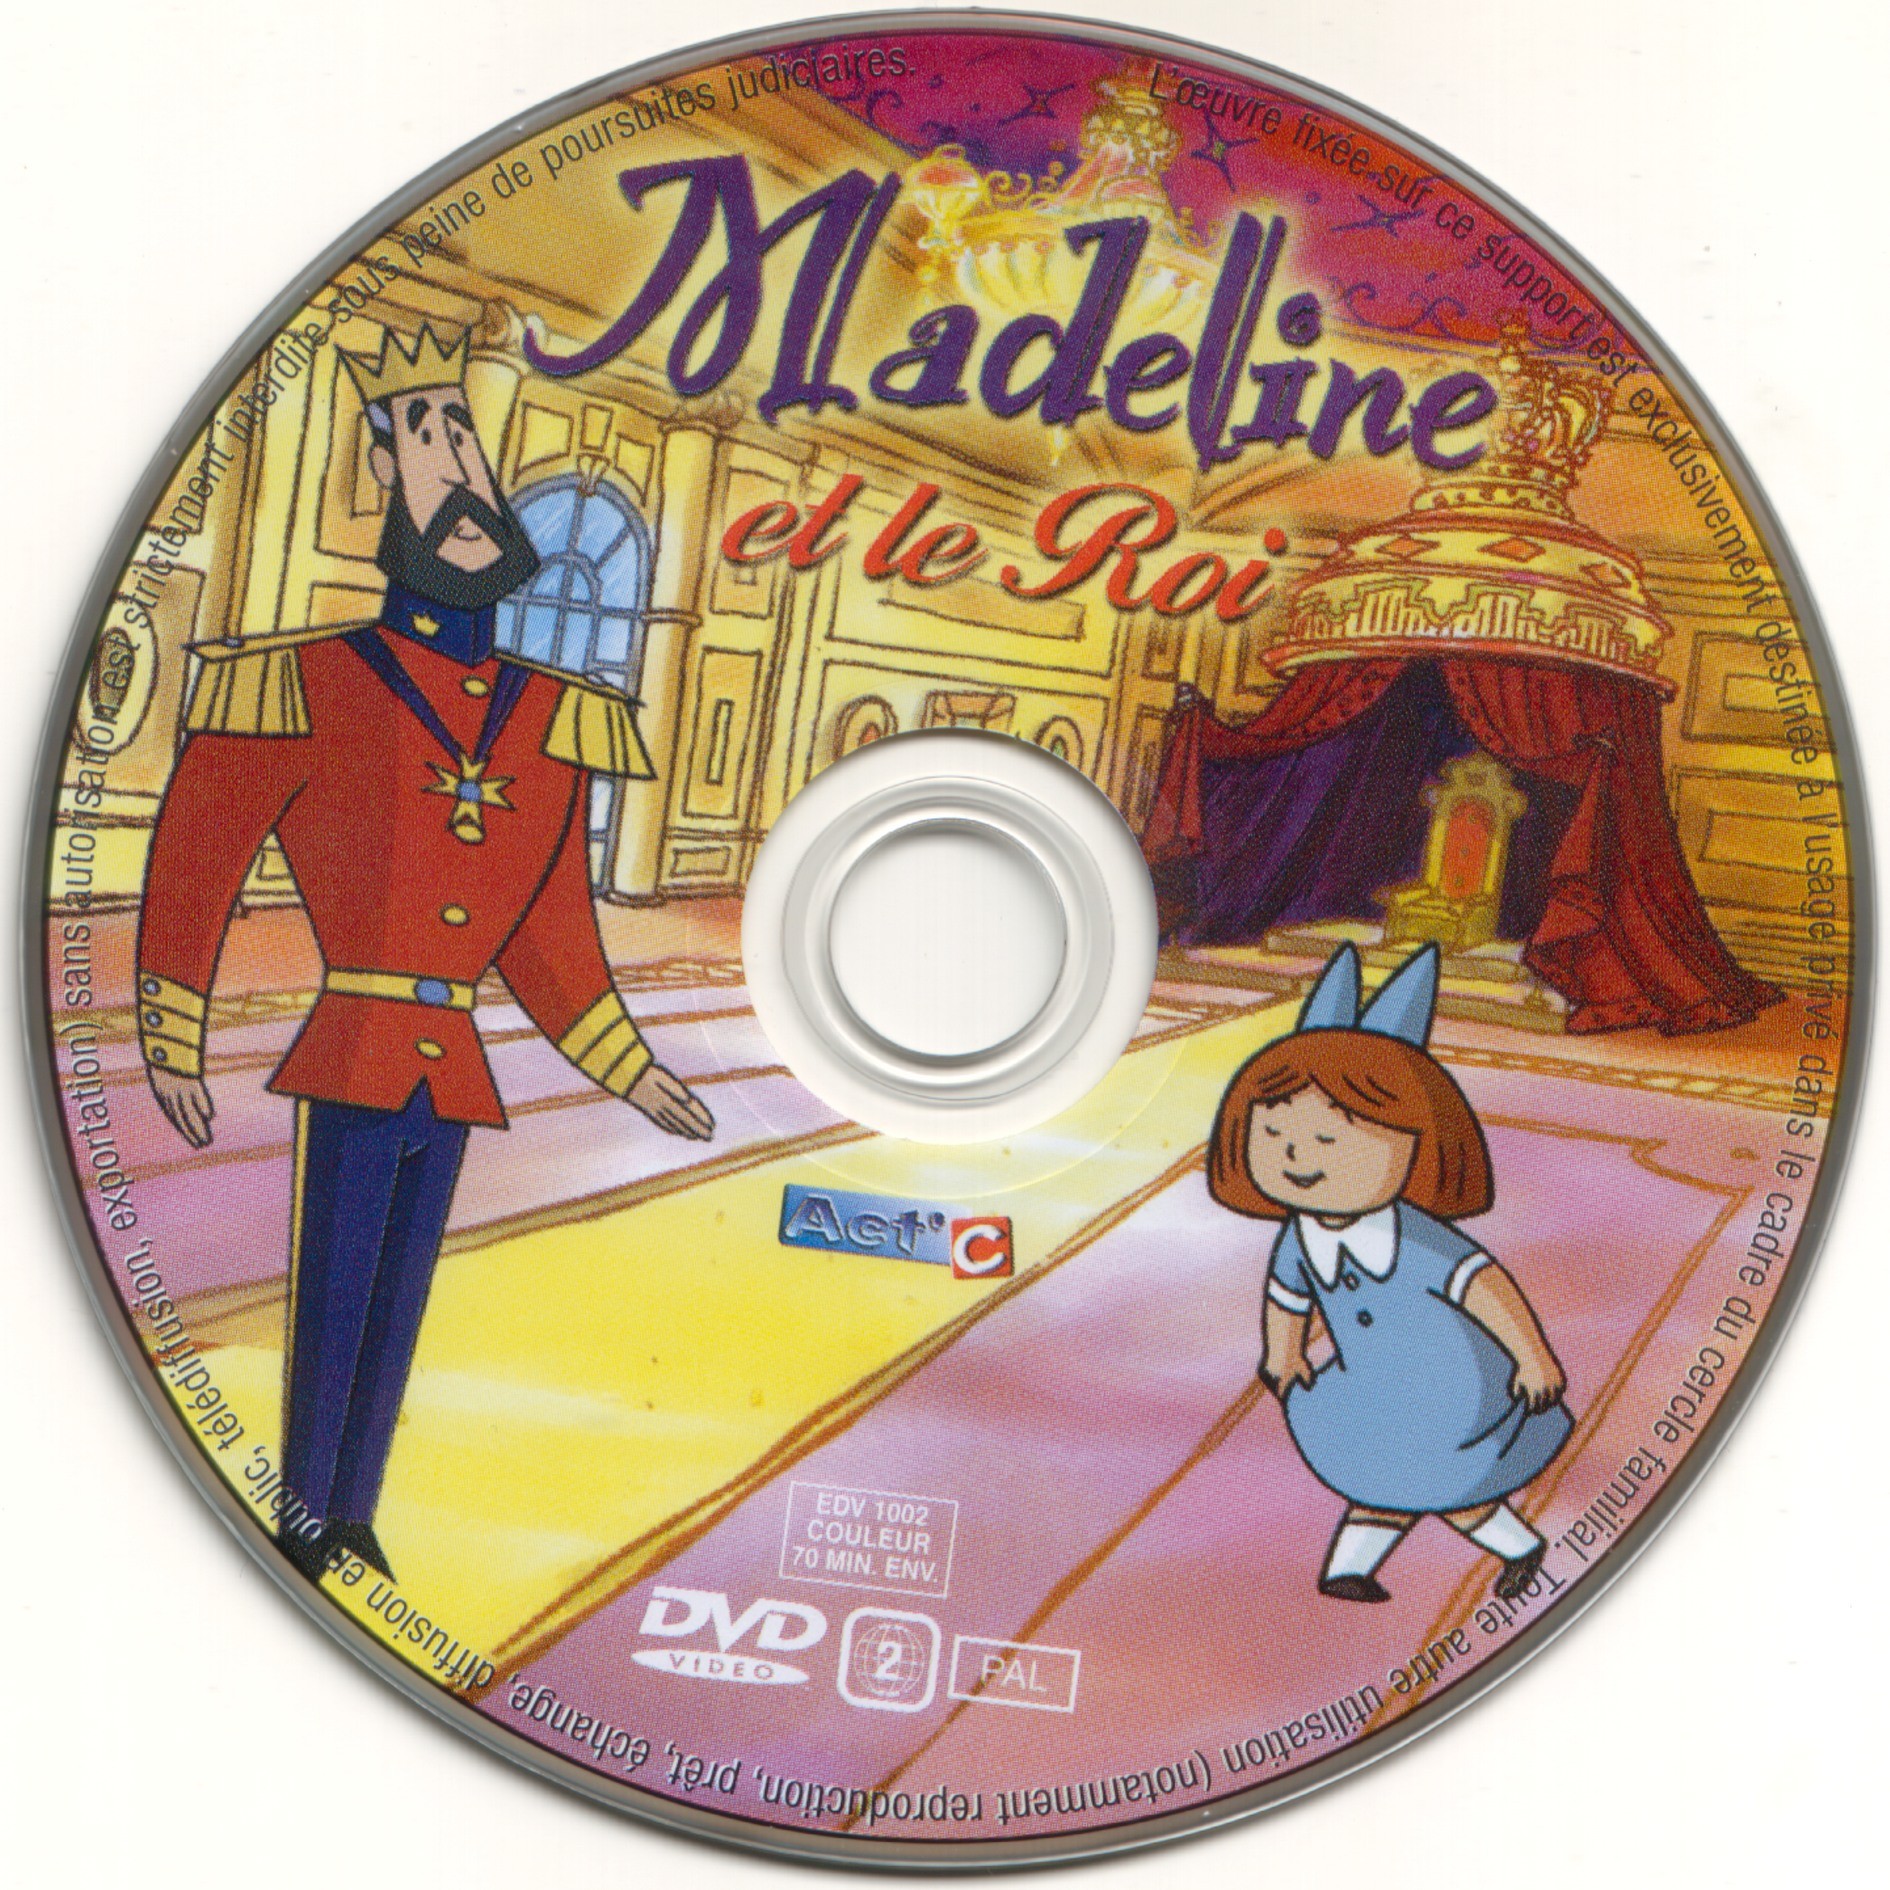 Madeline et le roi